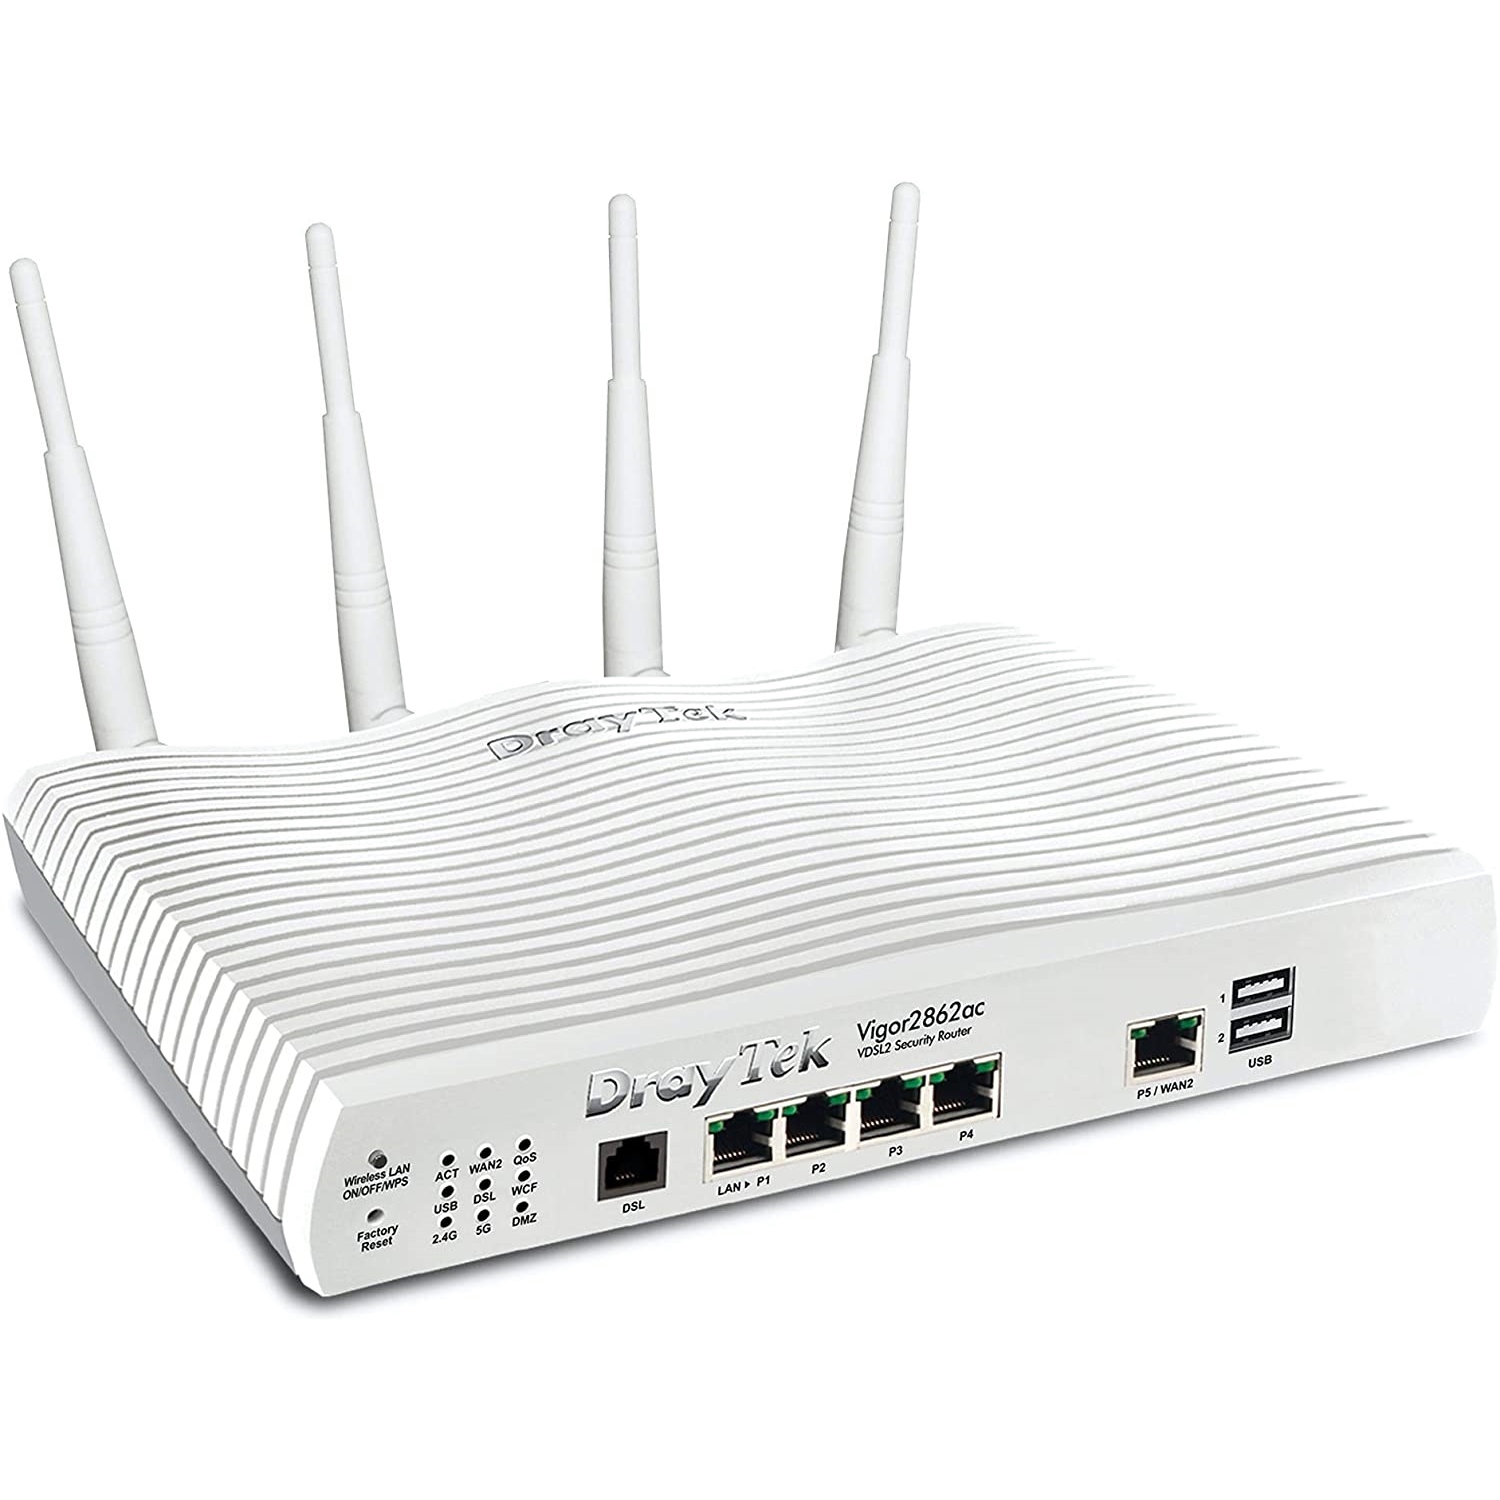 Draytek Vigor 2865ac ADSL2+/VDSL2/35b WiFi Dual WAN Security VPN Router Modem